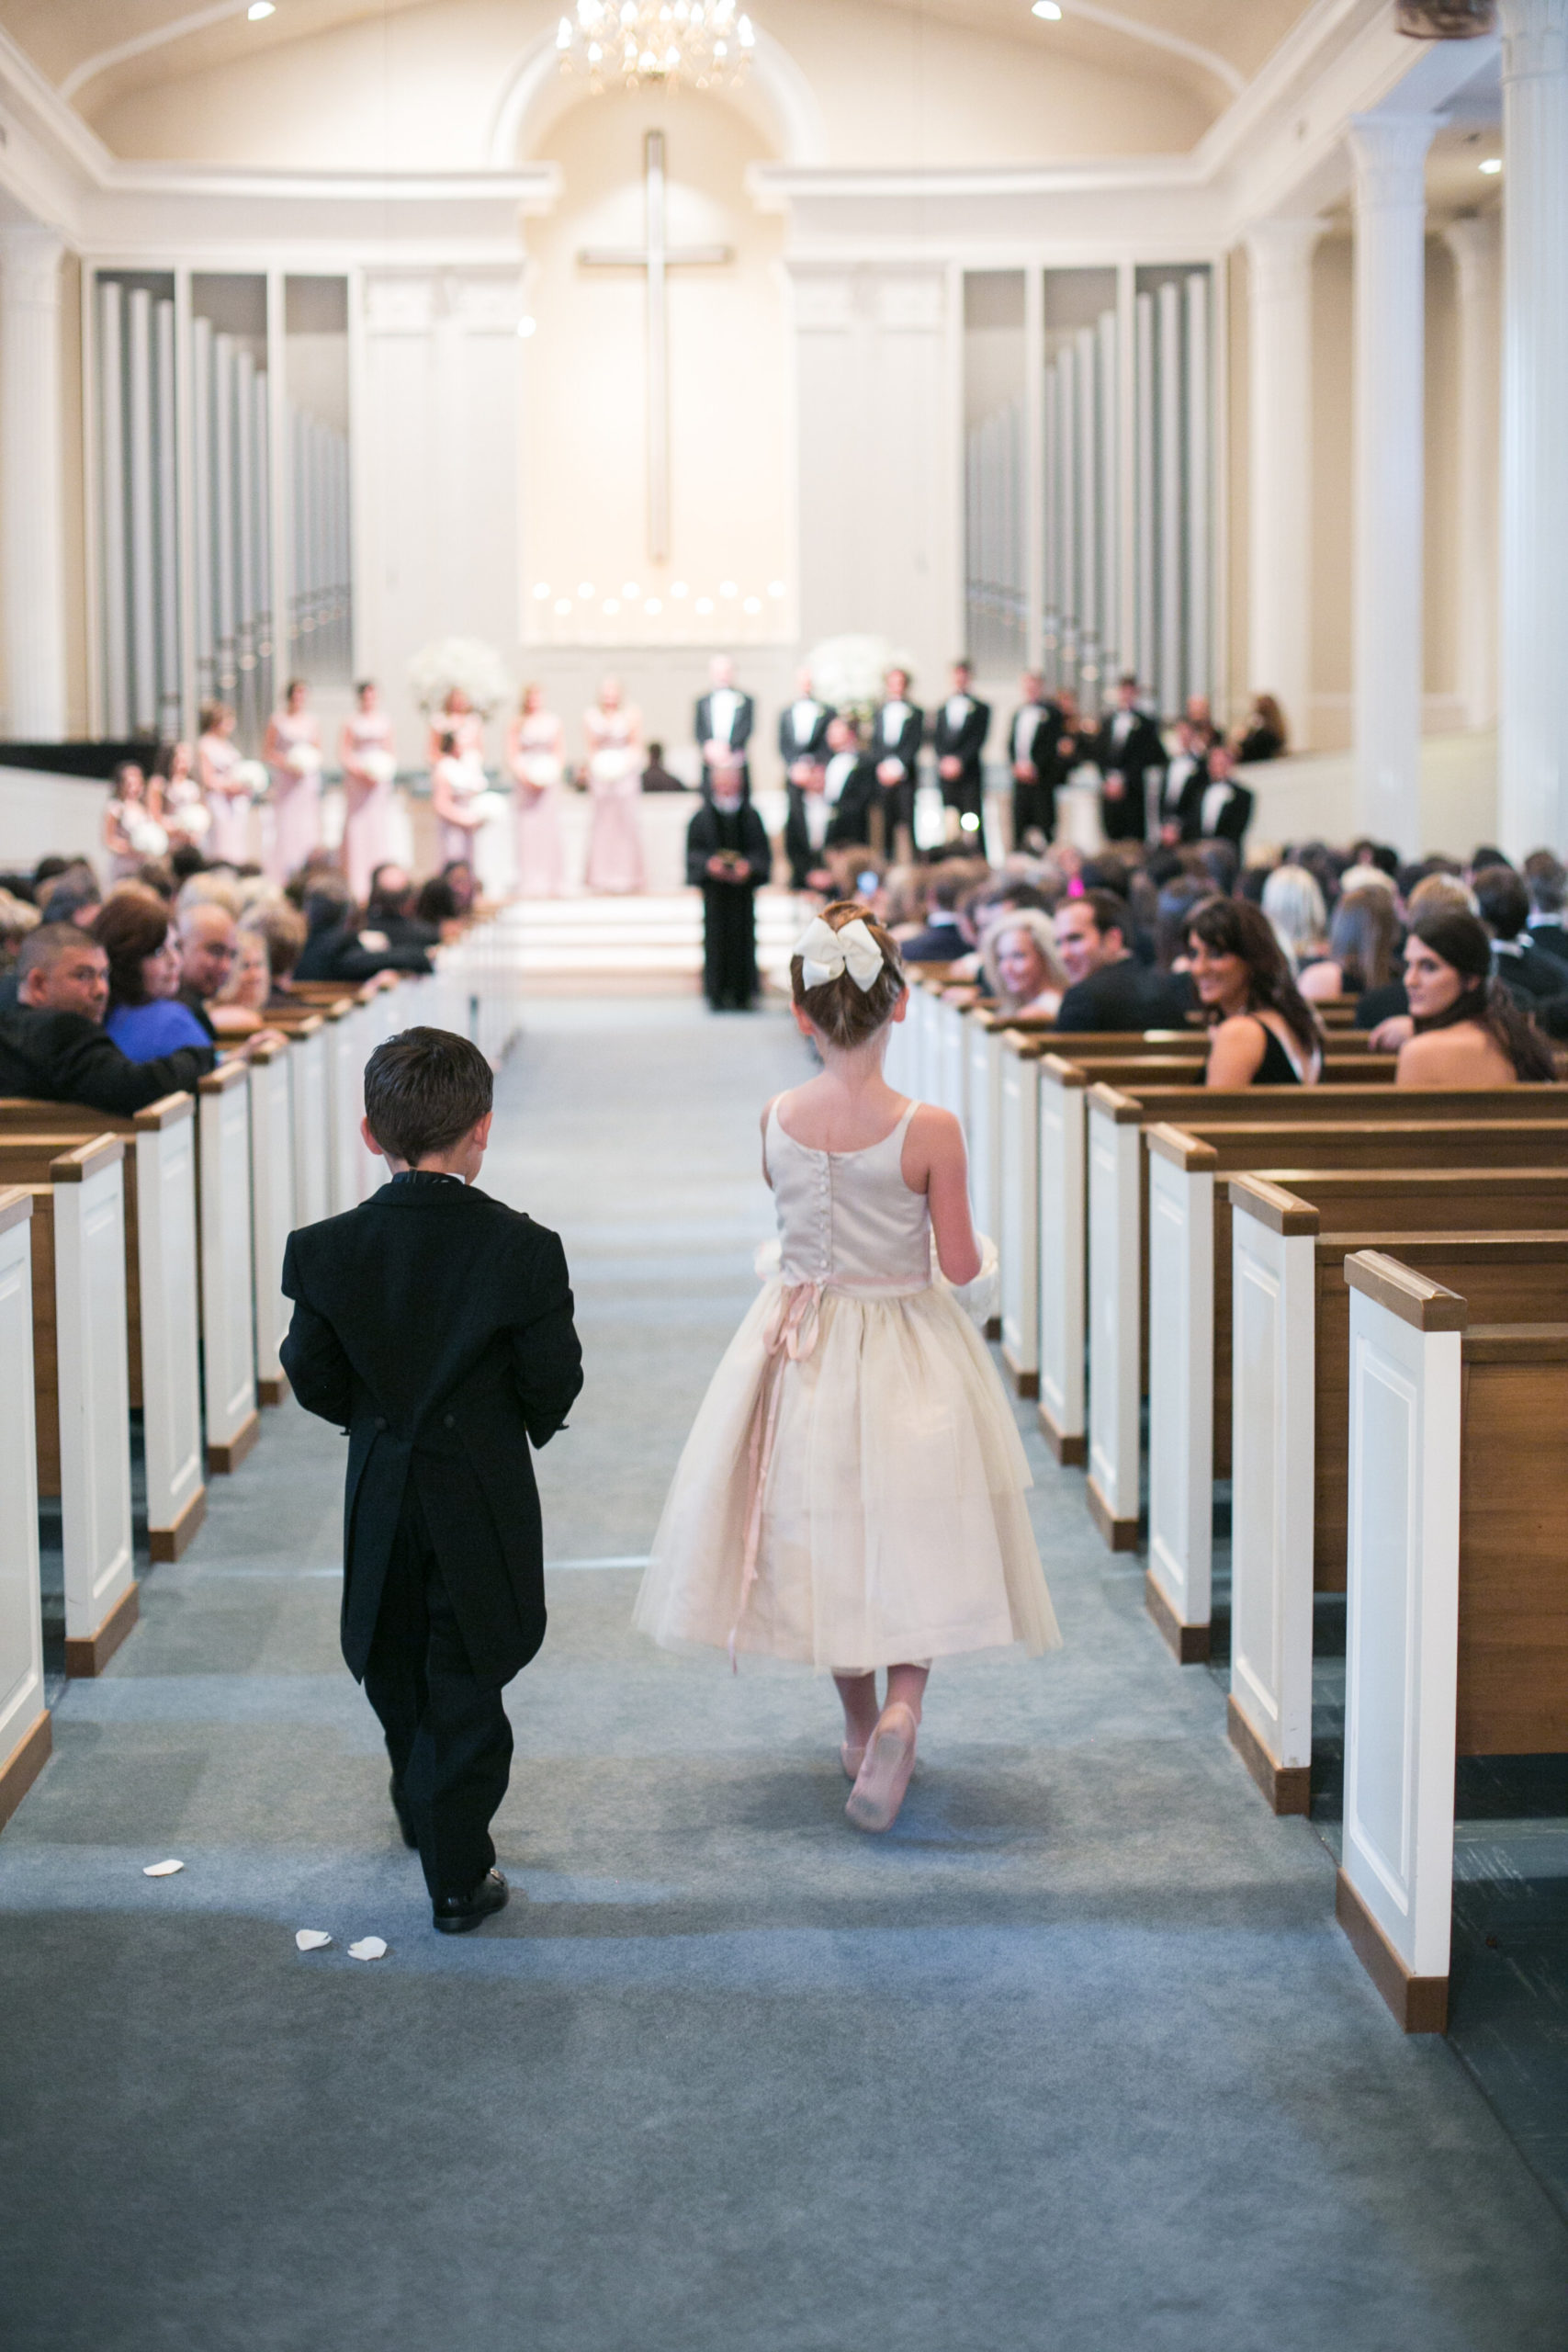 Ceremony Inspiration - Previous Wedding at Royal Lane Baptist